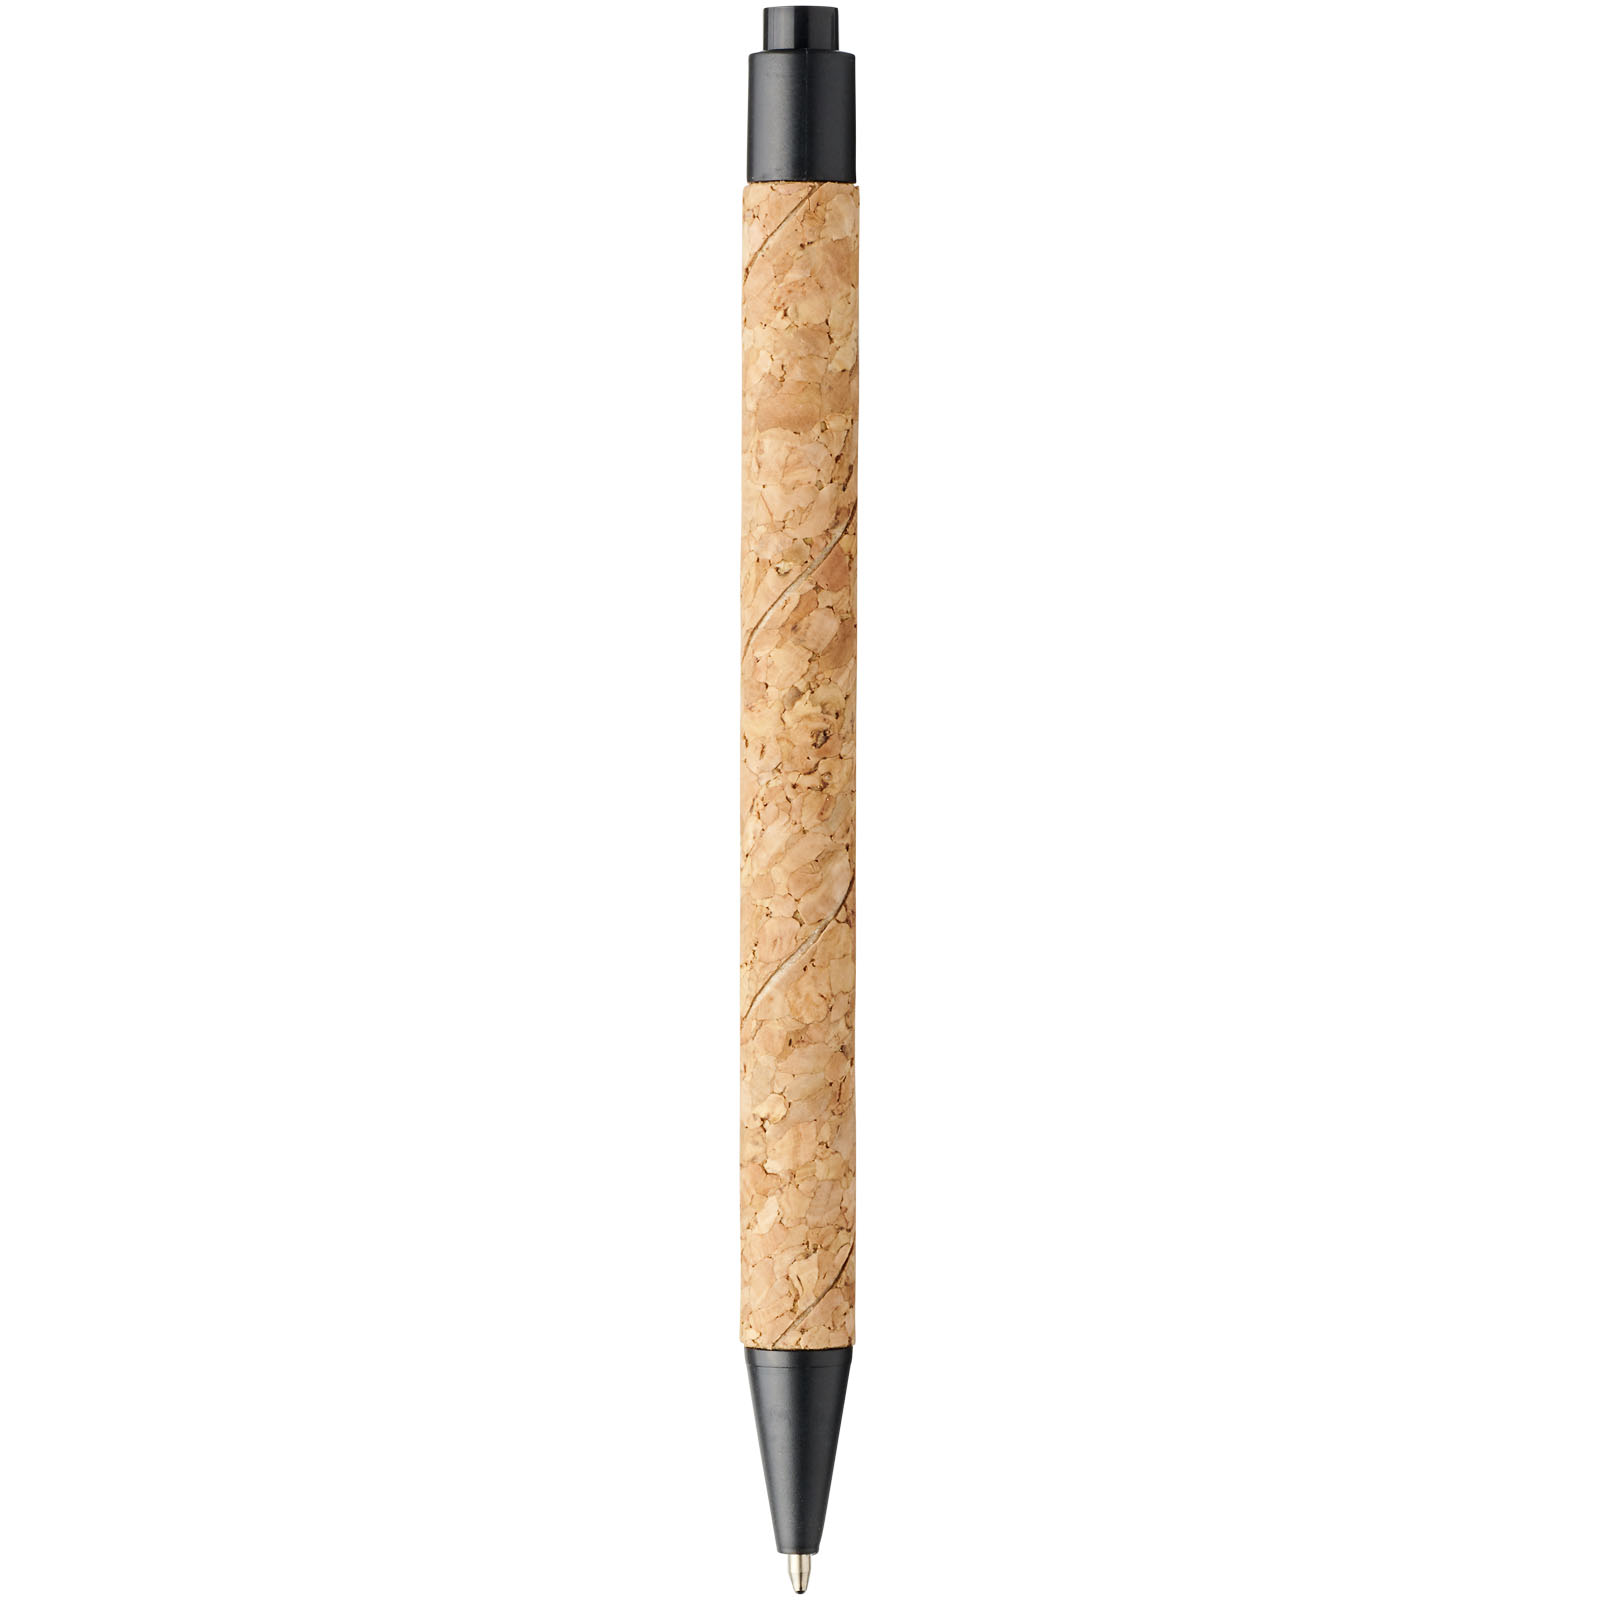 Advertising Ballpoint Pens - Midar cork and wheat straw ballpoint pen - 2